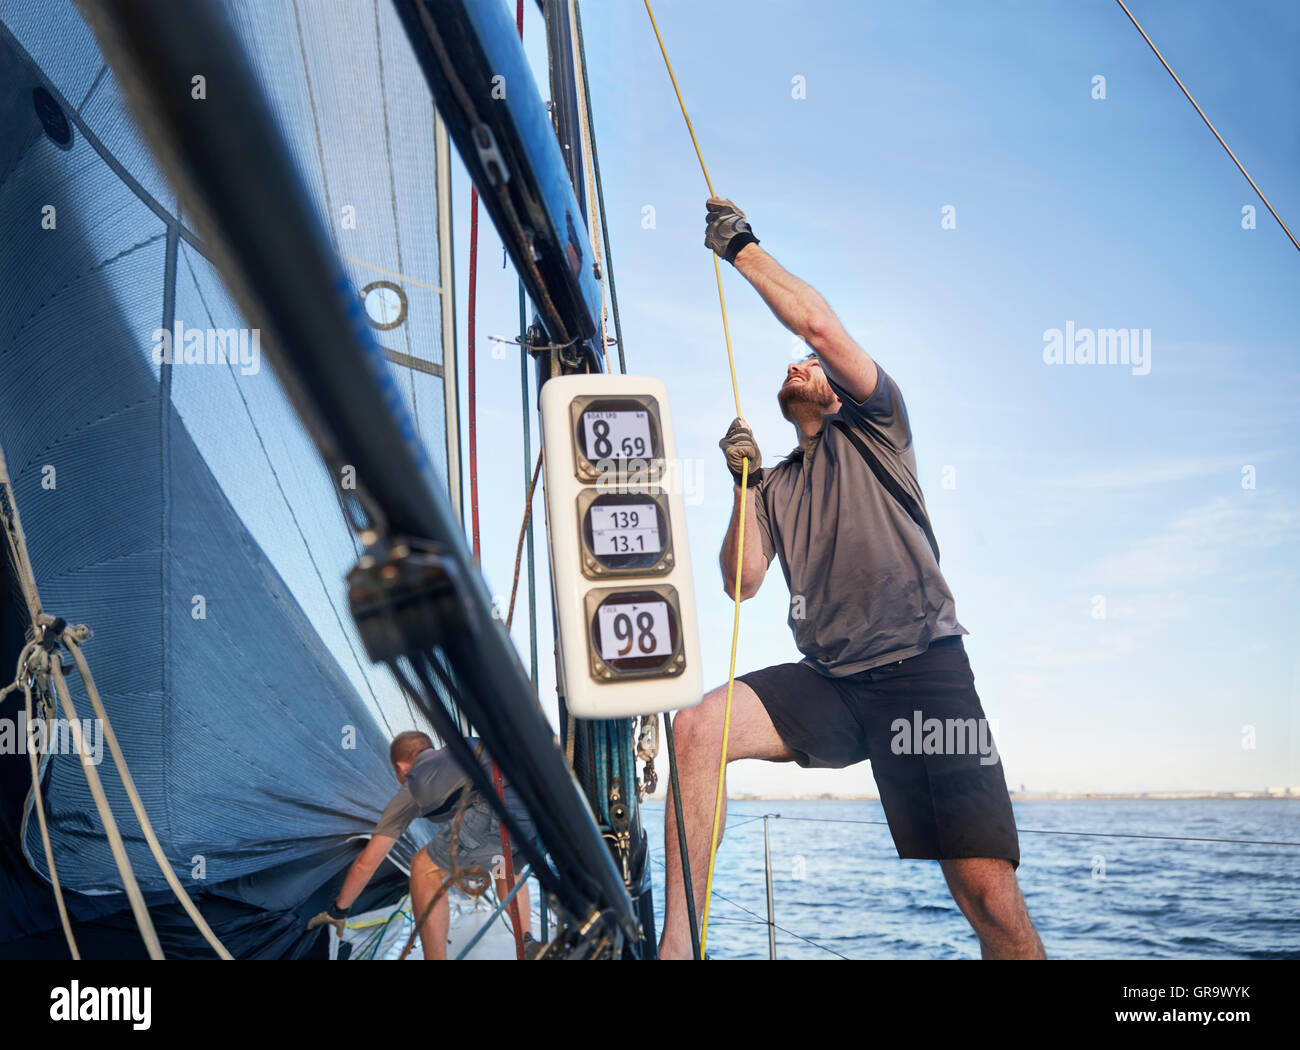 Man adjusting sailing equipment on sailboat Stock Photo